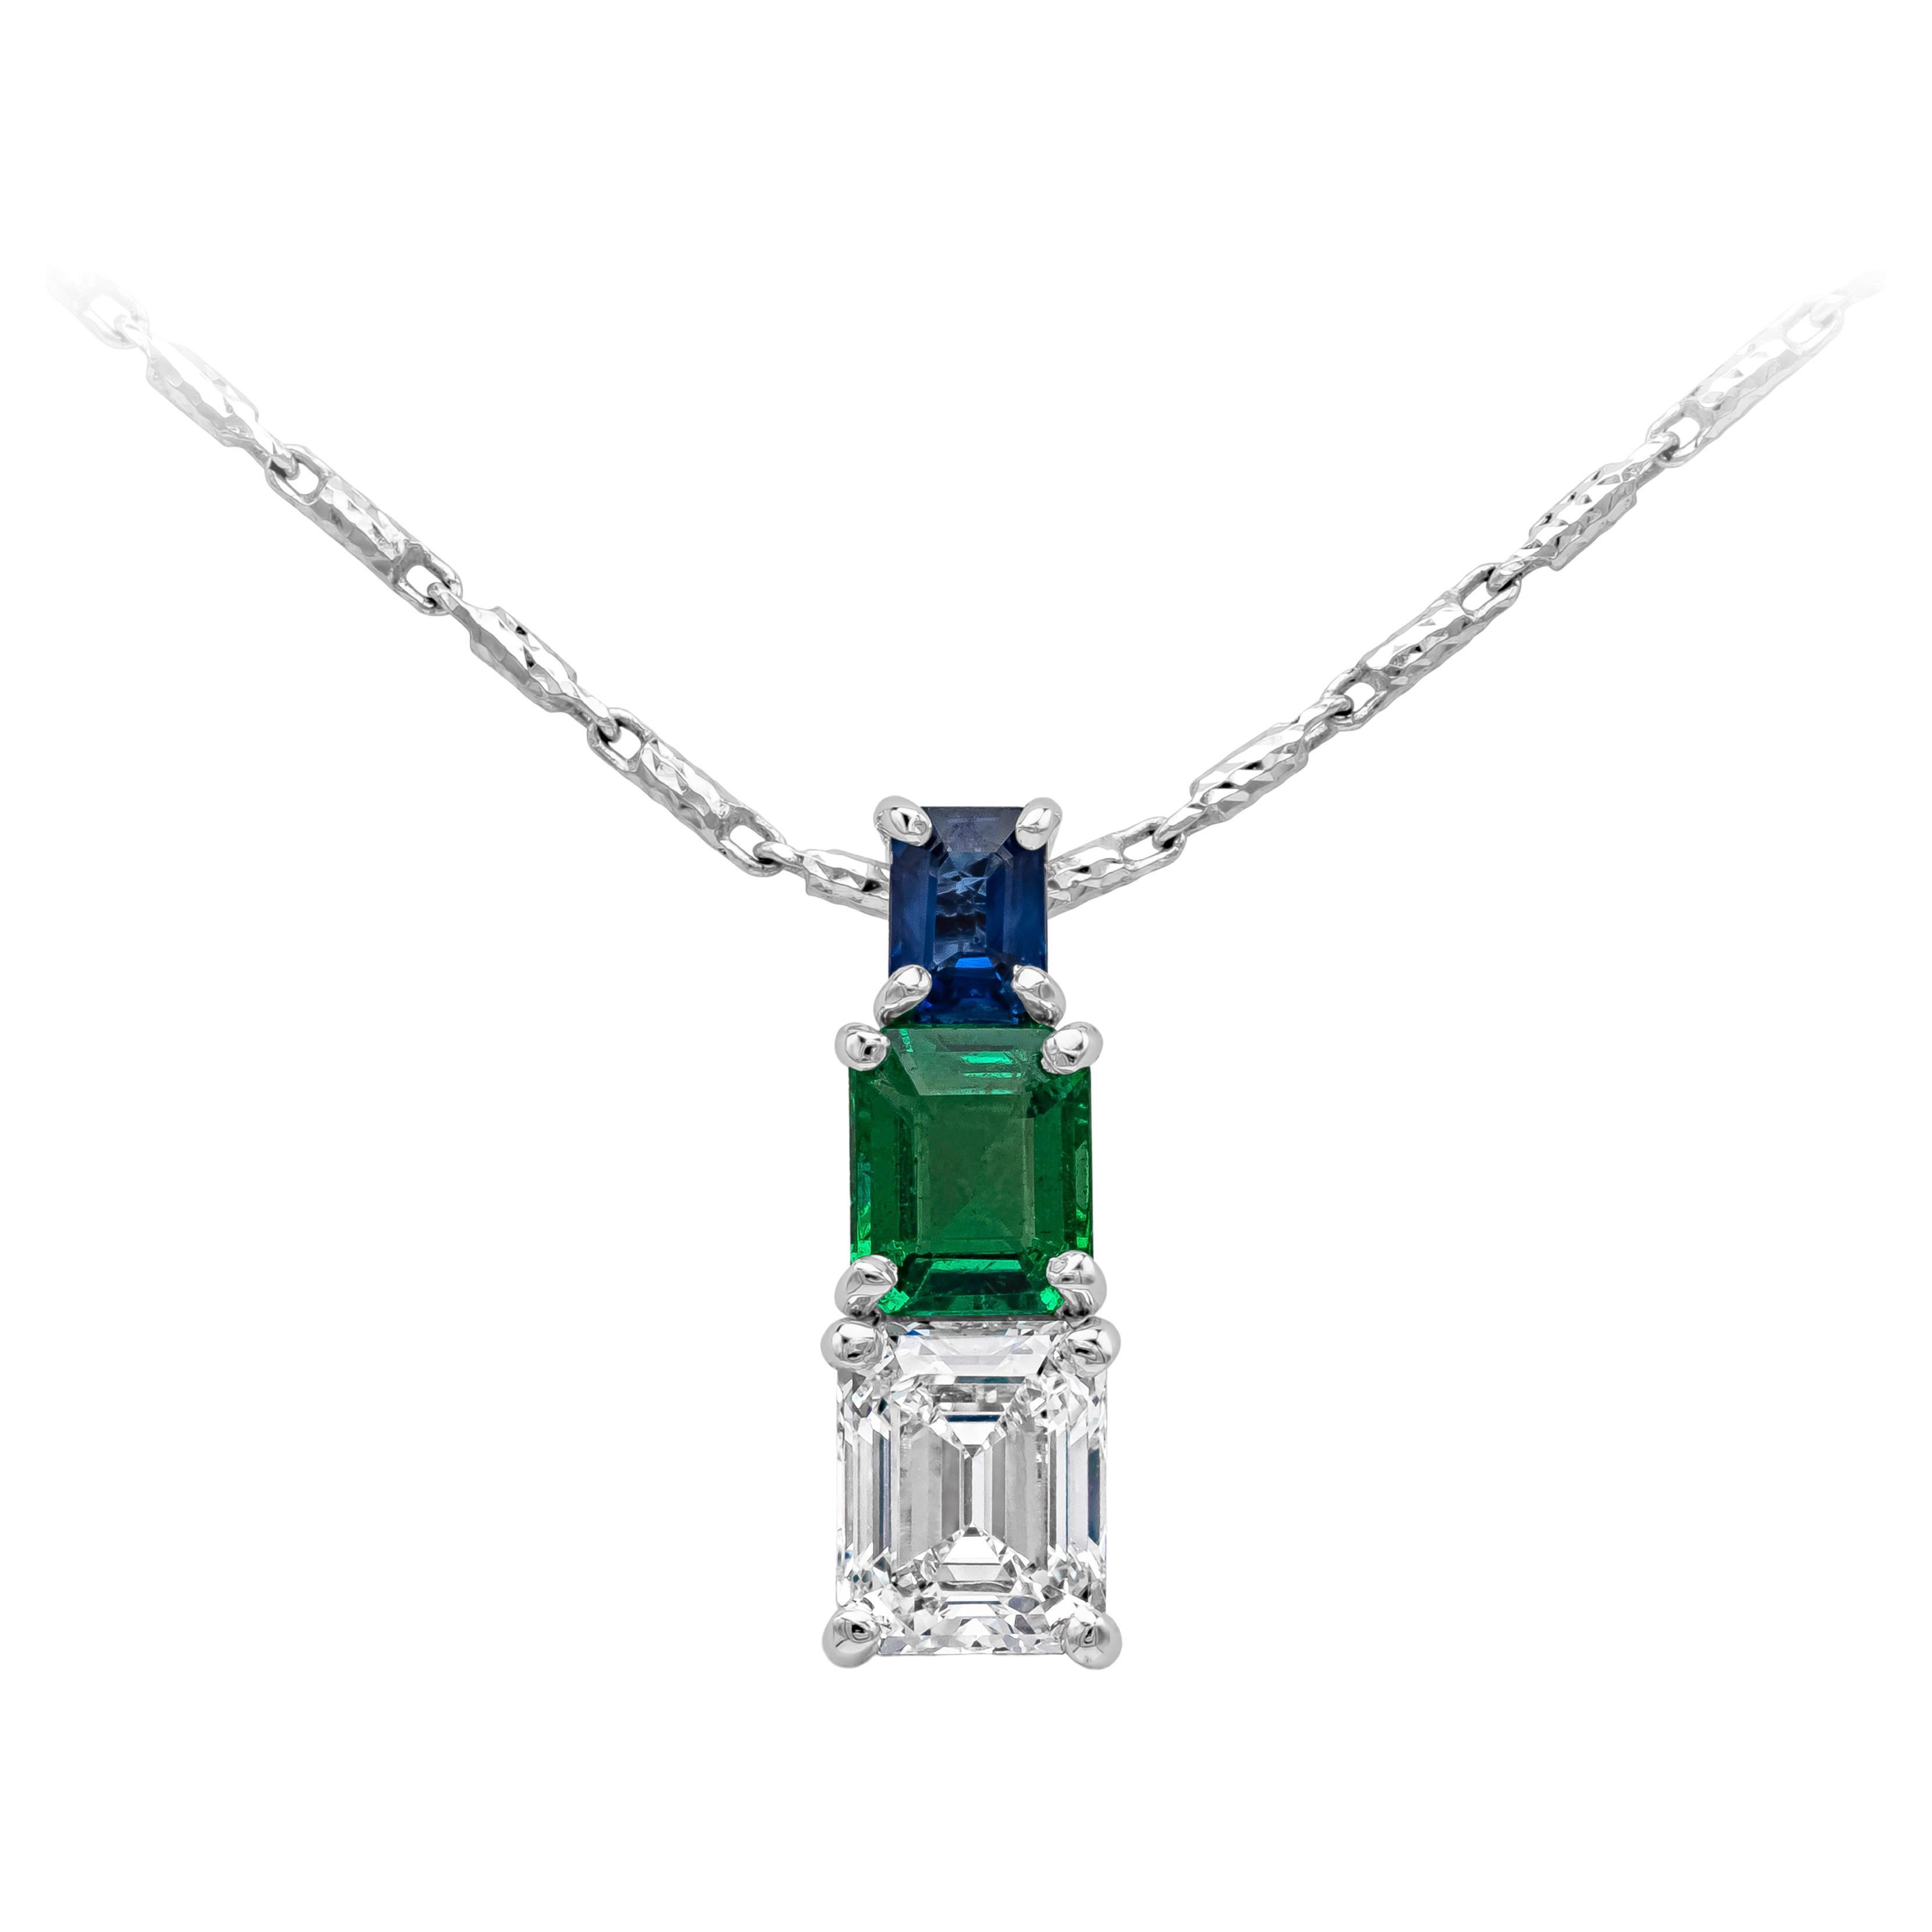 1.46 Carats Total Emerald Cut Emerald, Blue Sapphire & Diamond Pendant Necklace For Sale